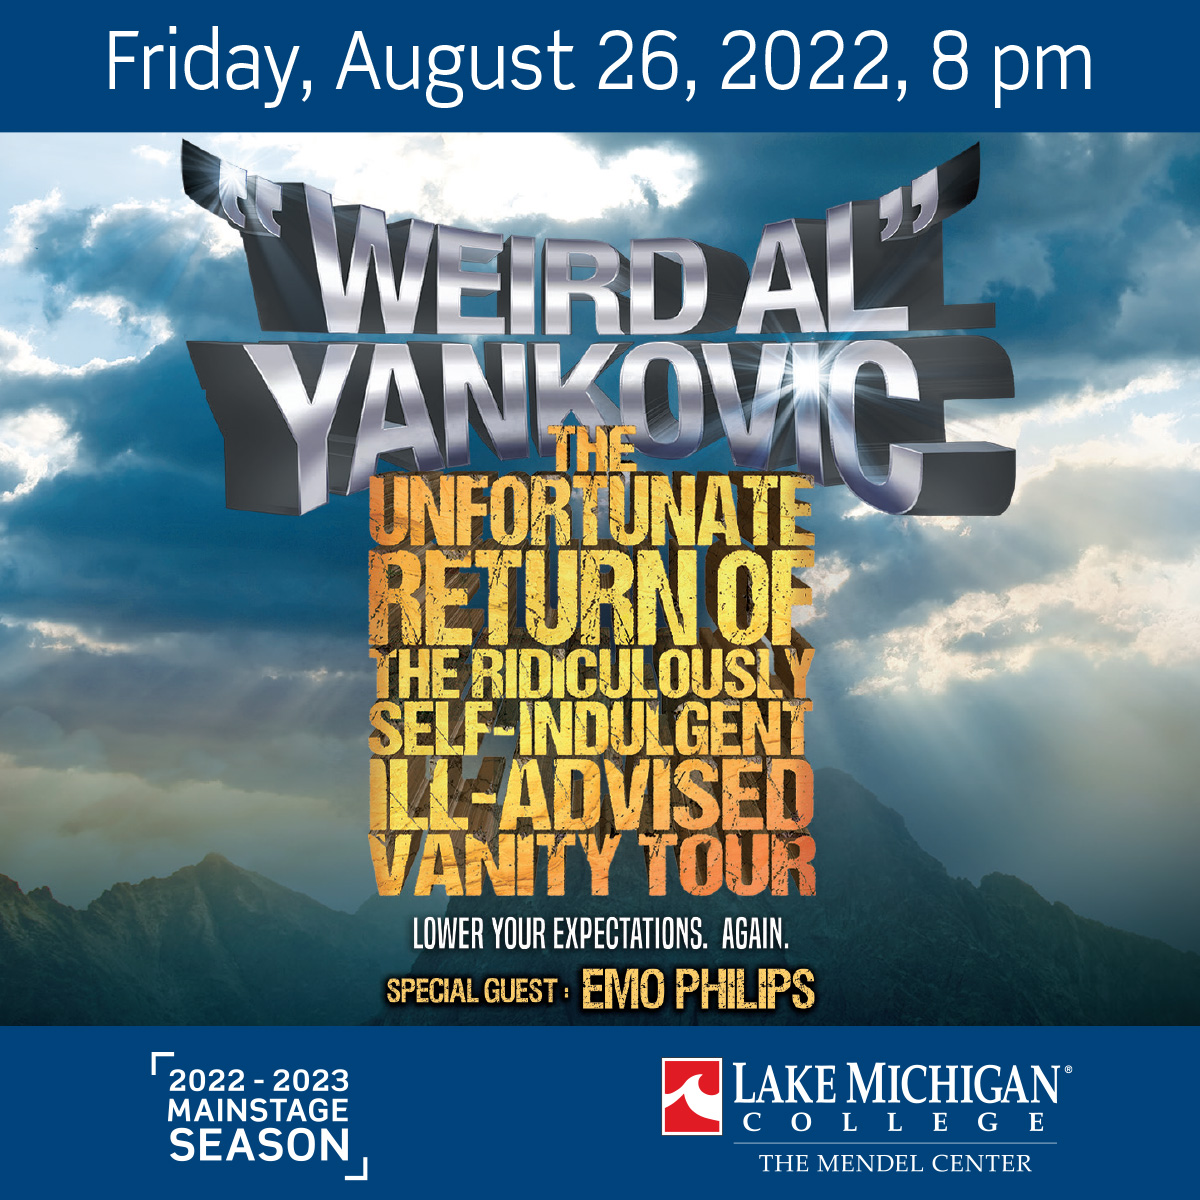 "Weird Al" Yankovic - The Unfortunate Return of the Ridiculously Self-Indulgent, Ill-Advised Vanity Tour